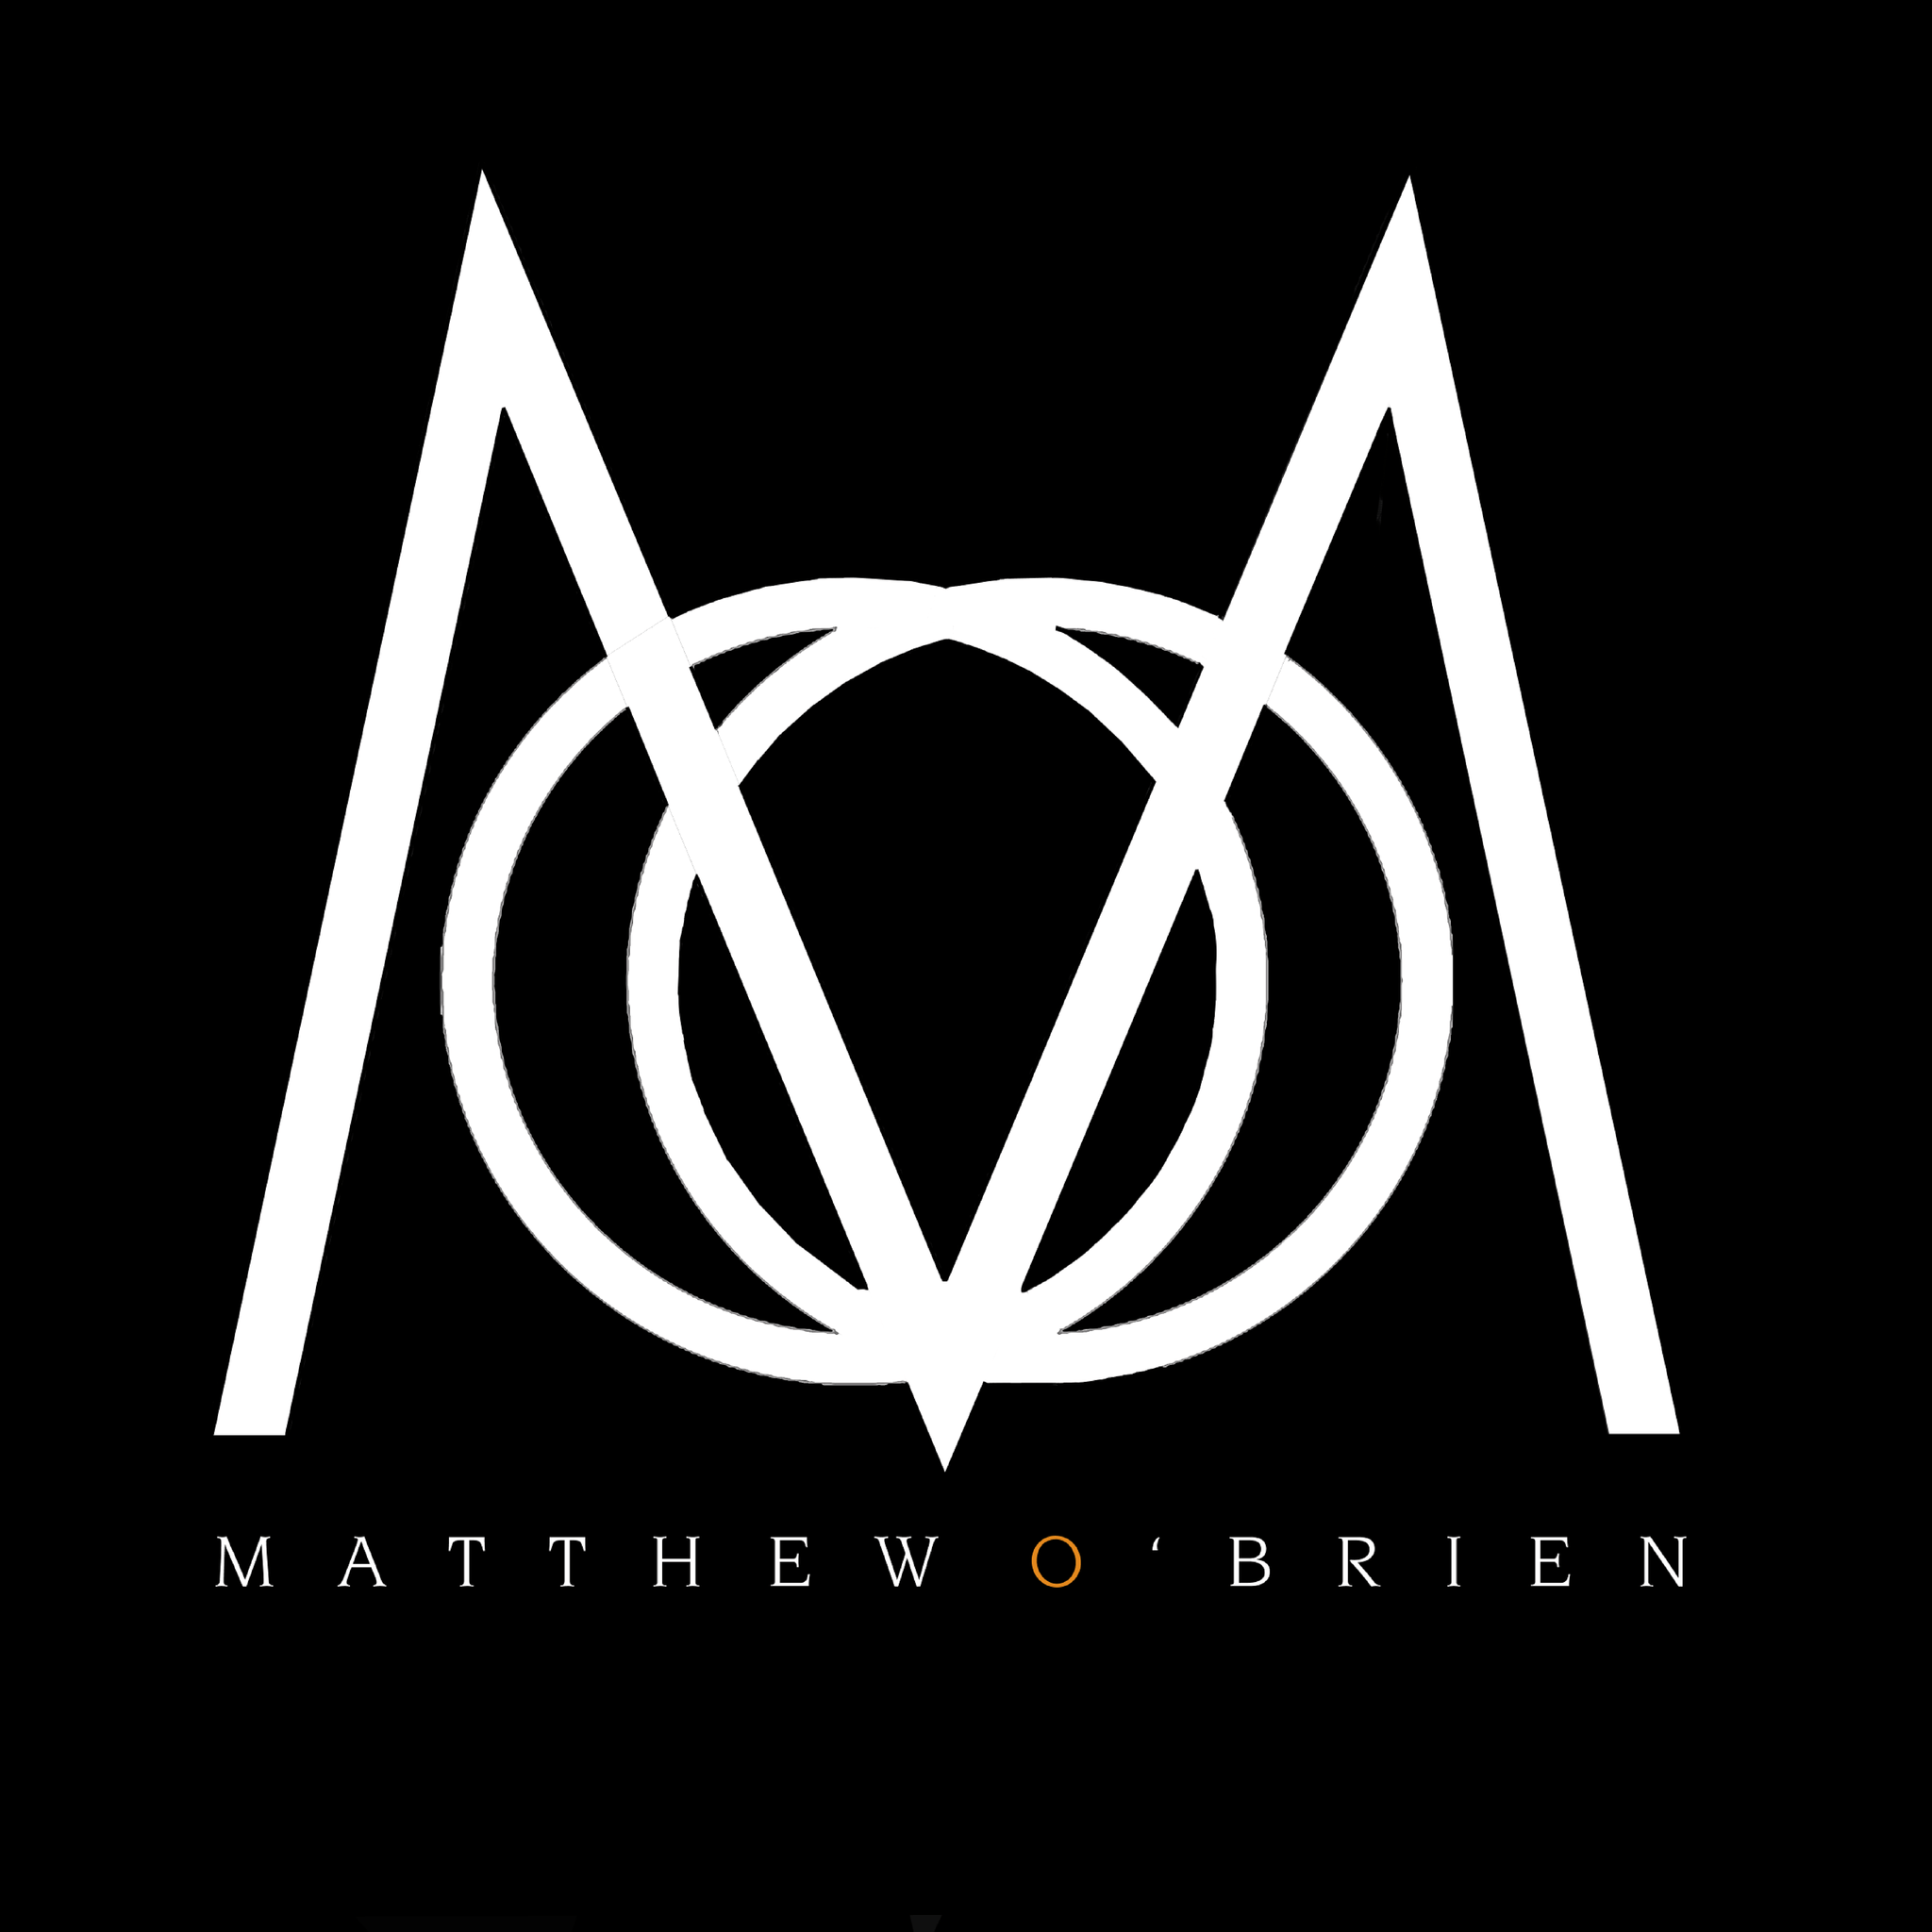 Matthew O'brien